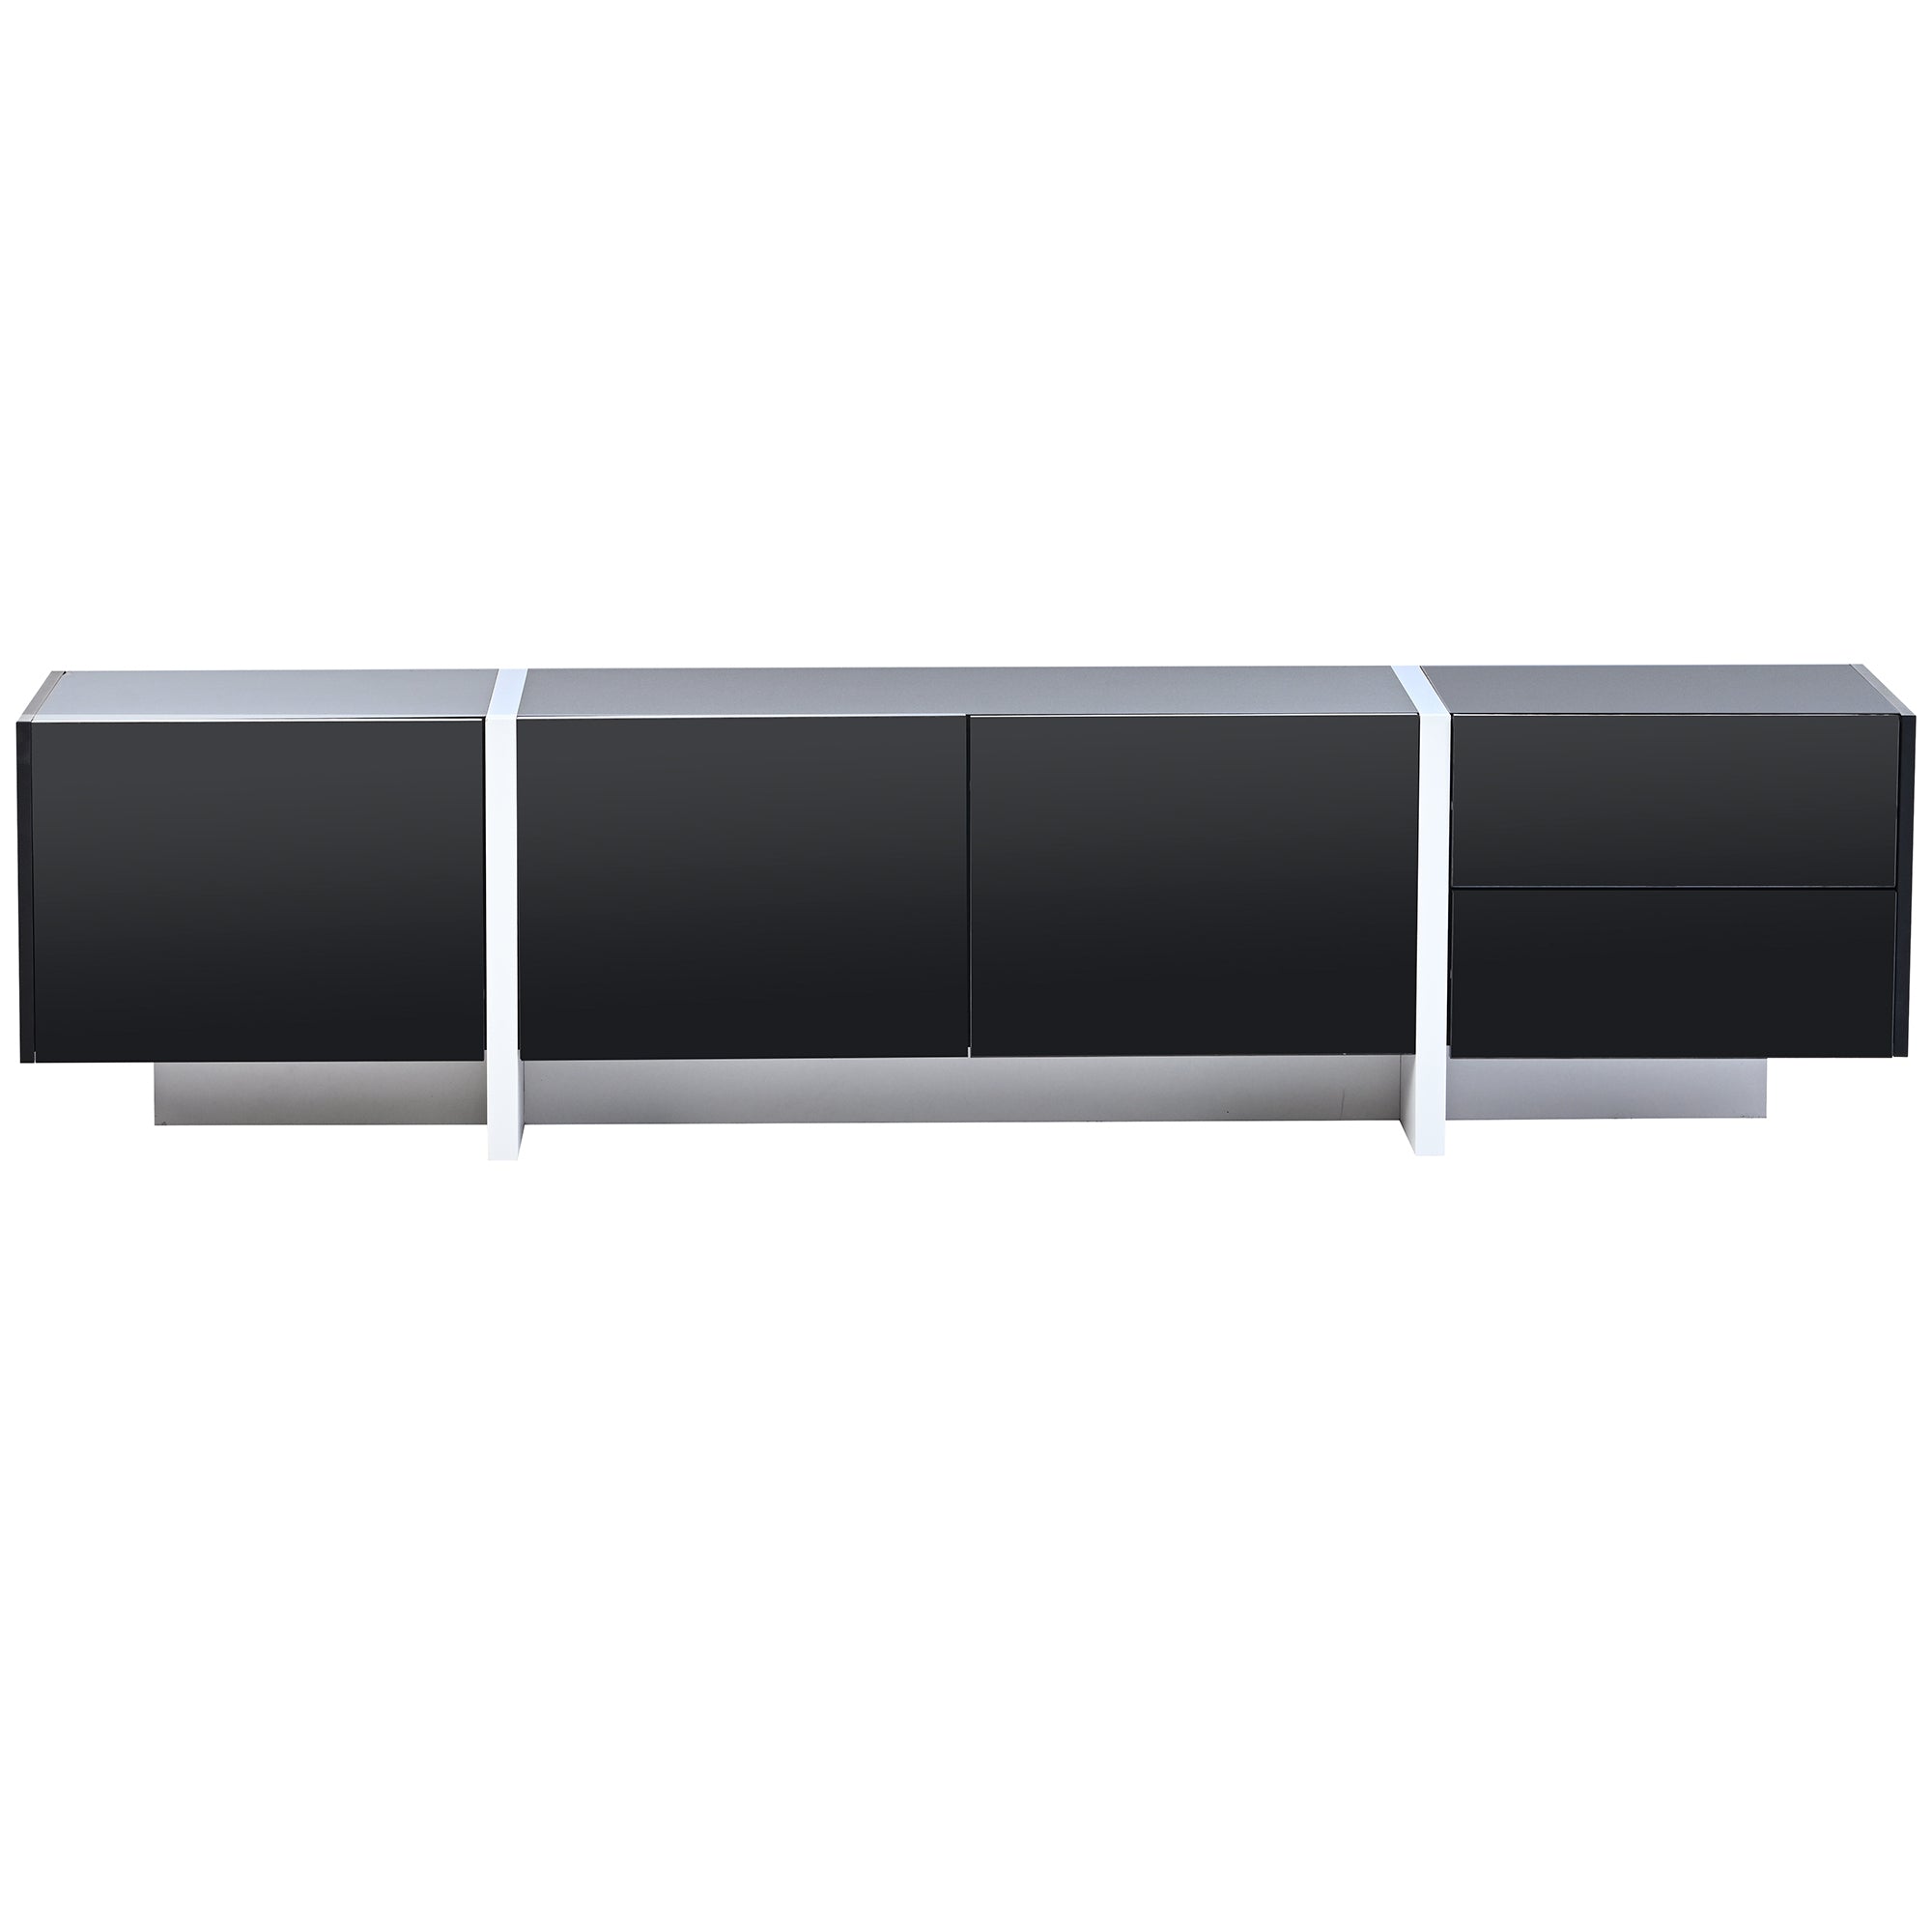 ON TREND White & Black Contemporary Rectangle Design black-particle board